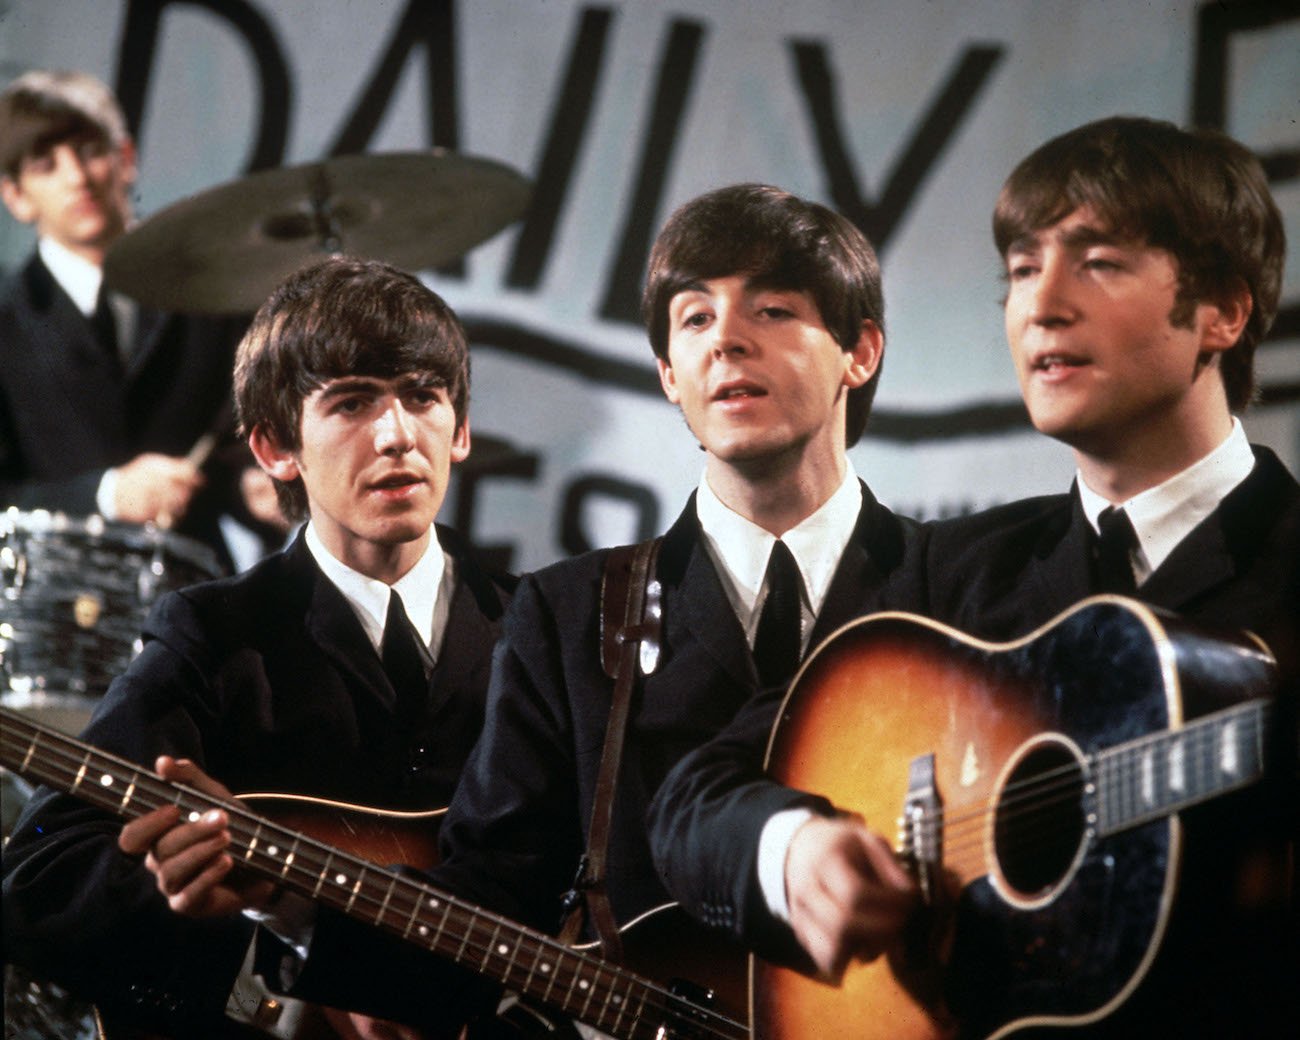 The Beatles performing in 1963.